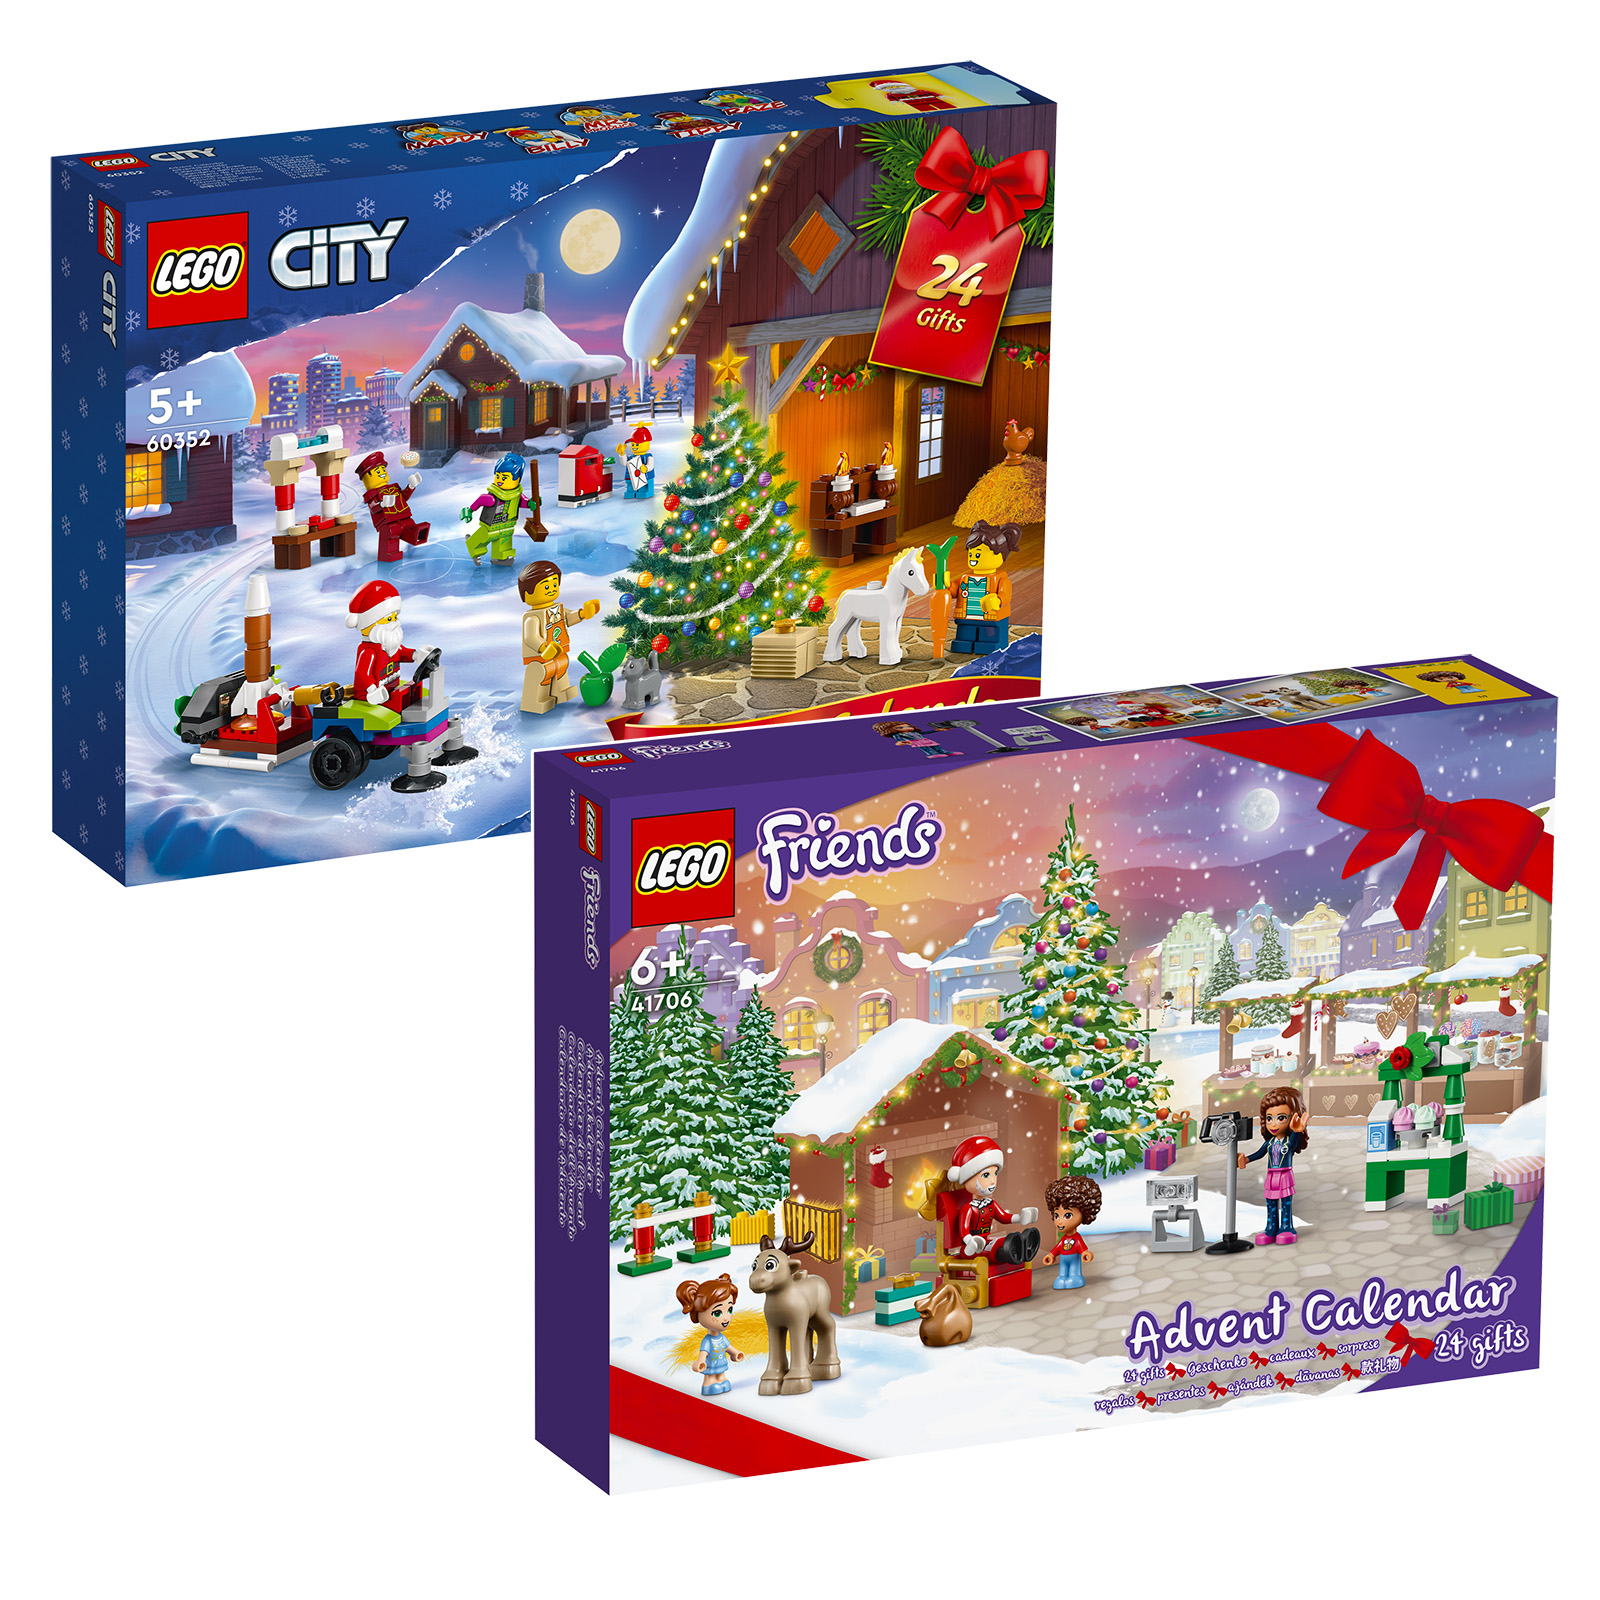 Kalender Advent 2022 LEGO CITY & Friends: setnya online di Toko